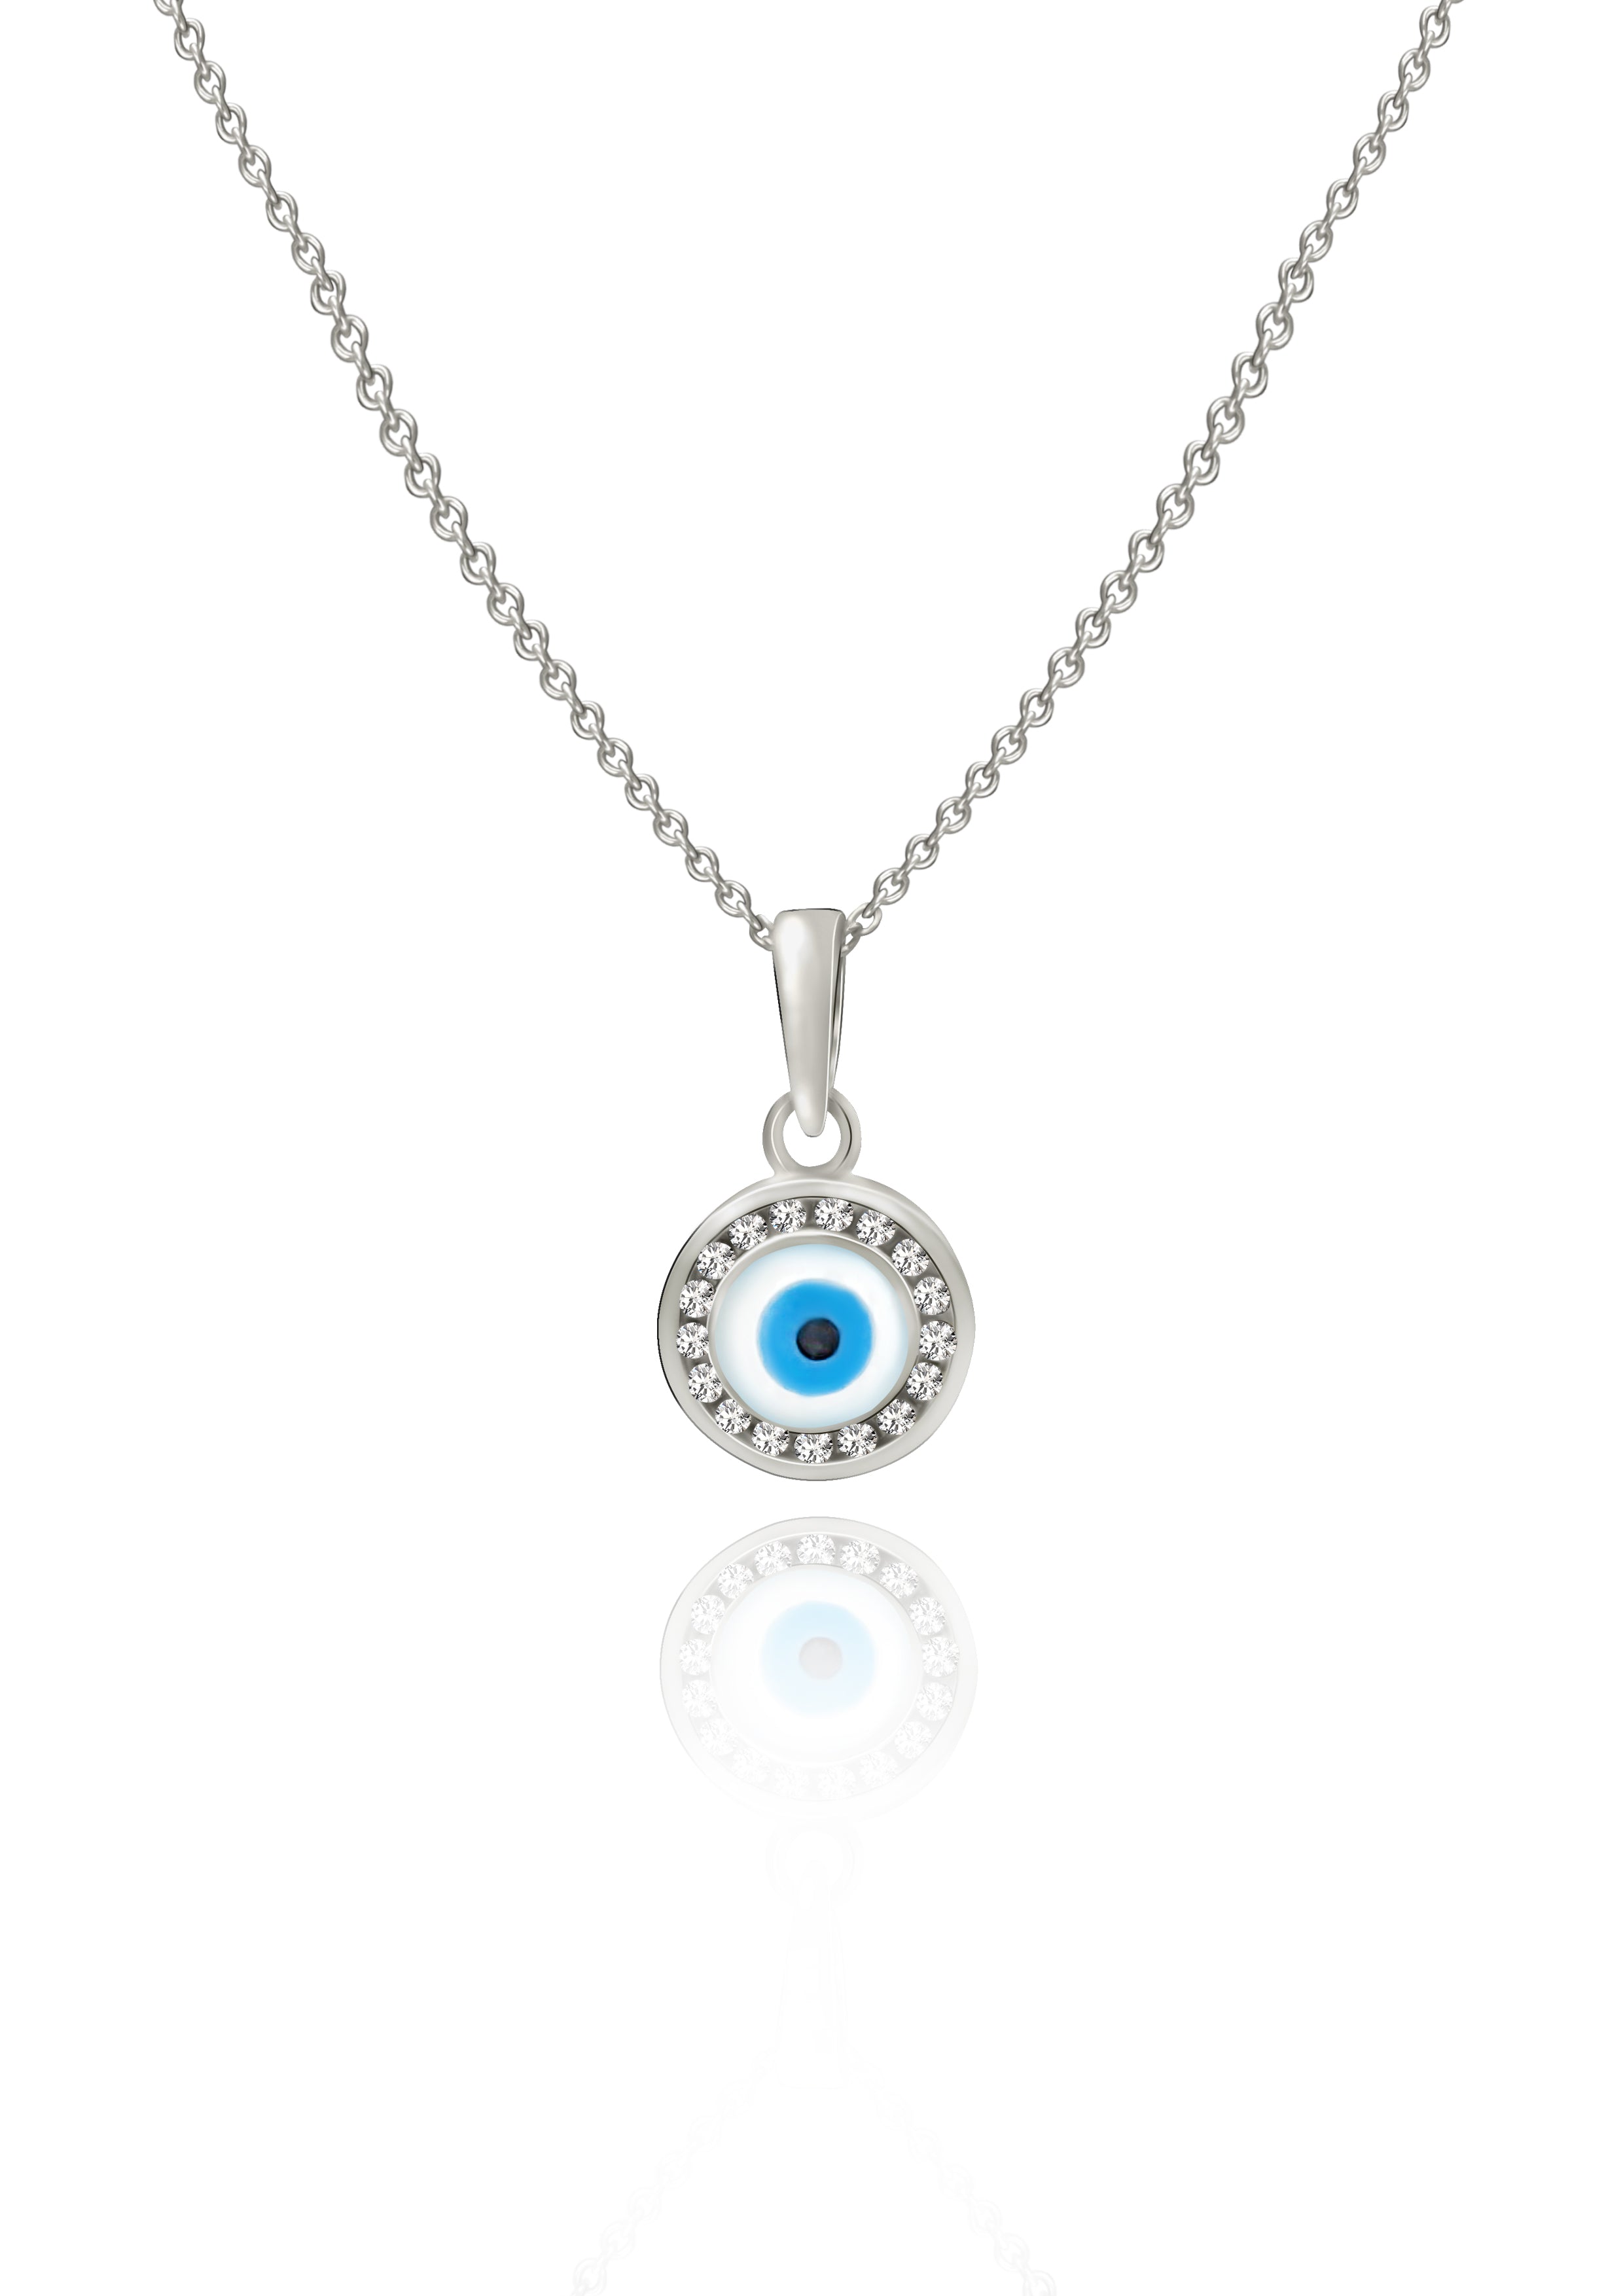 Silver evil eye pendant